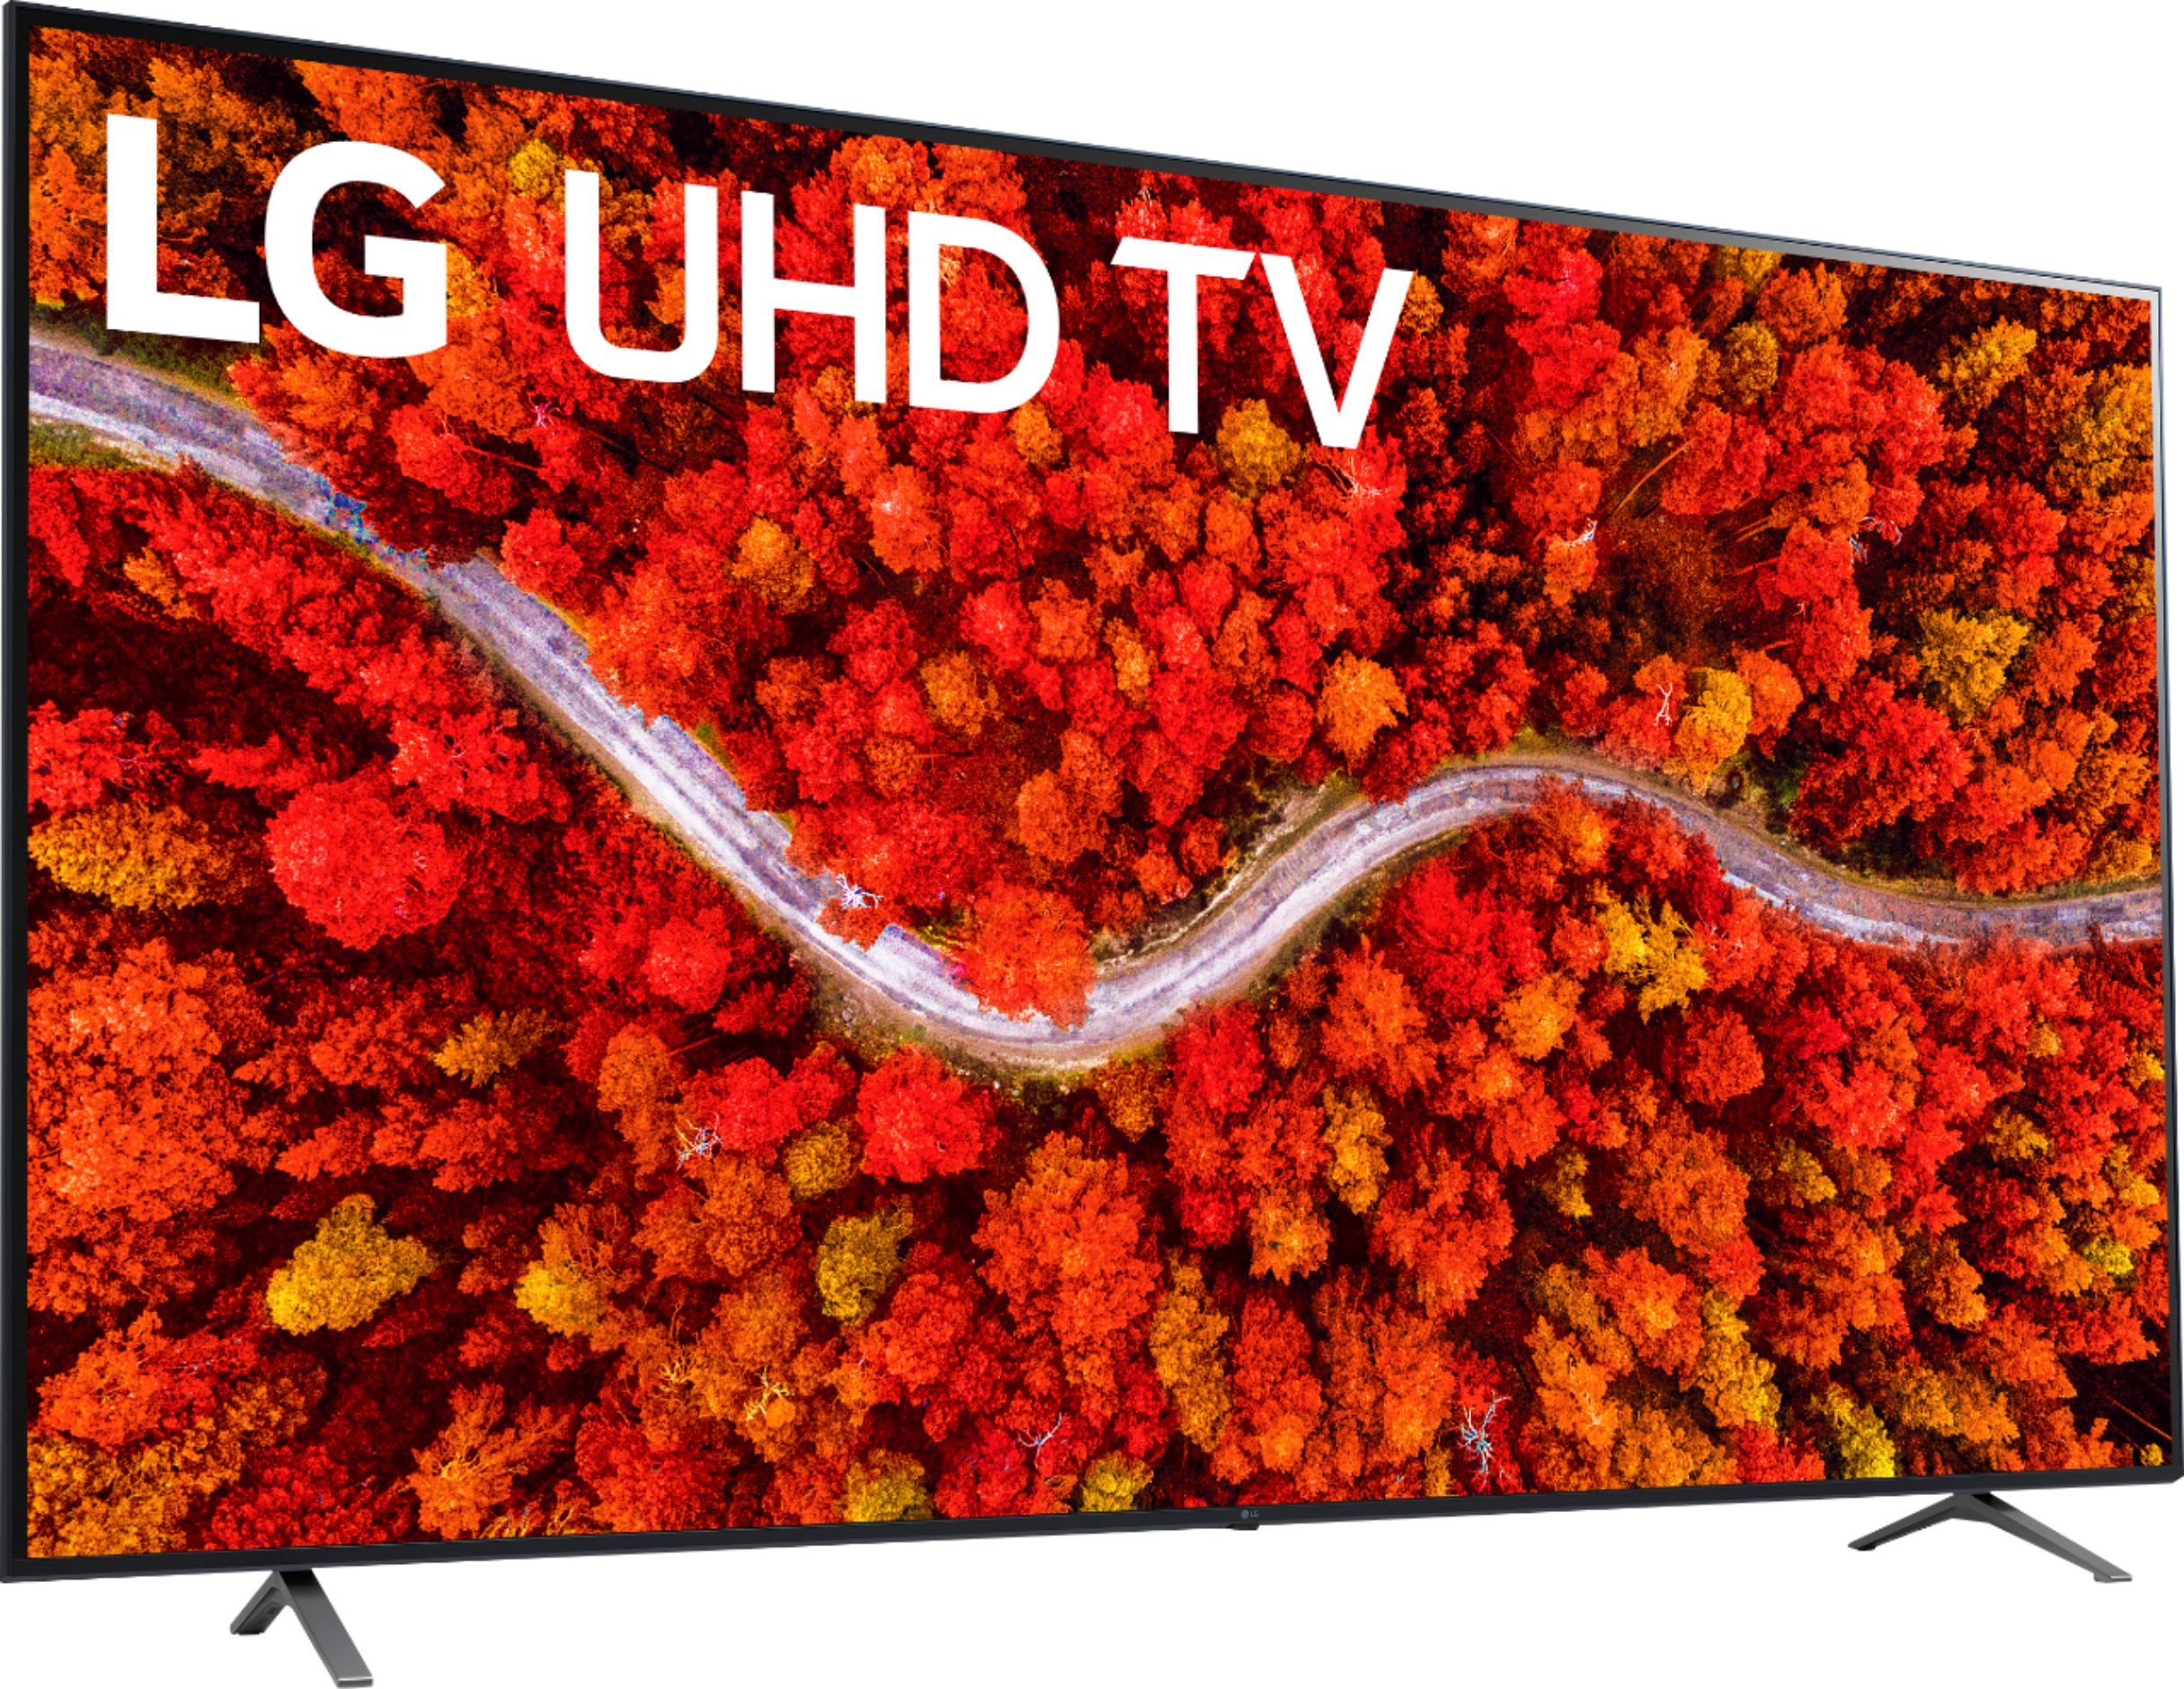 82" LG UP8770 4K 120Hz UHD Smart TV + Soundbar @ Best Buy $999.99